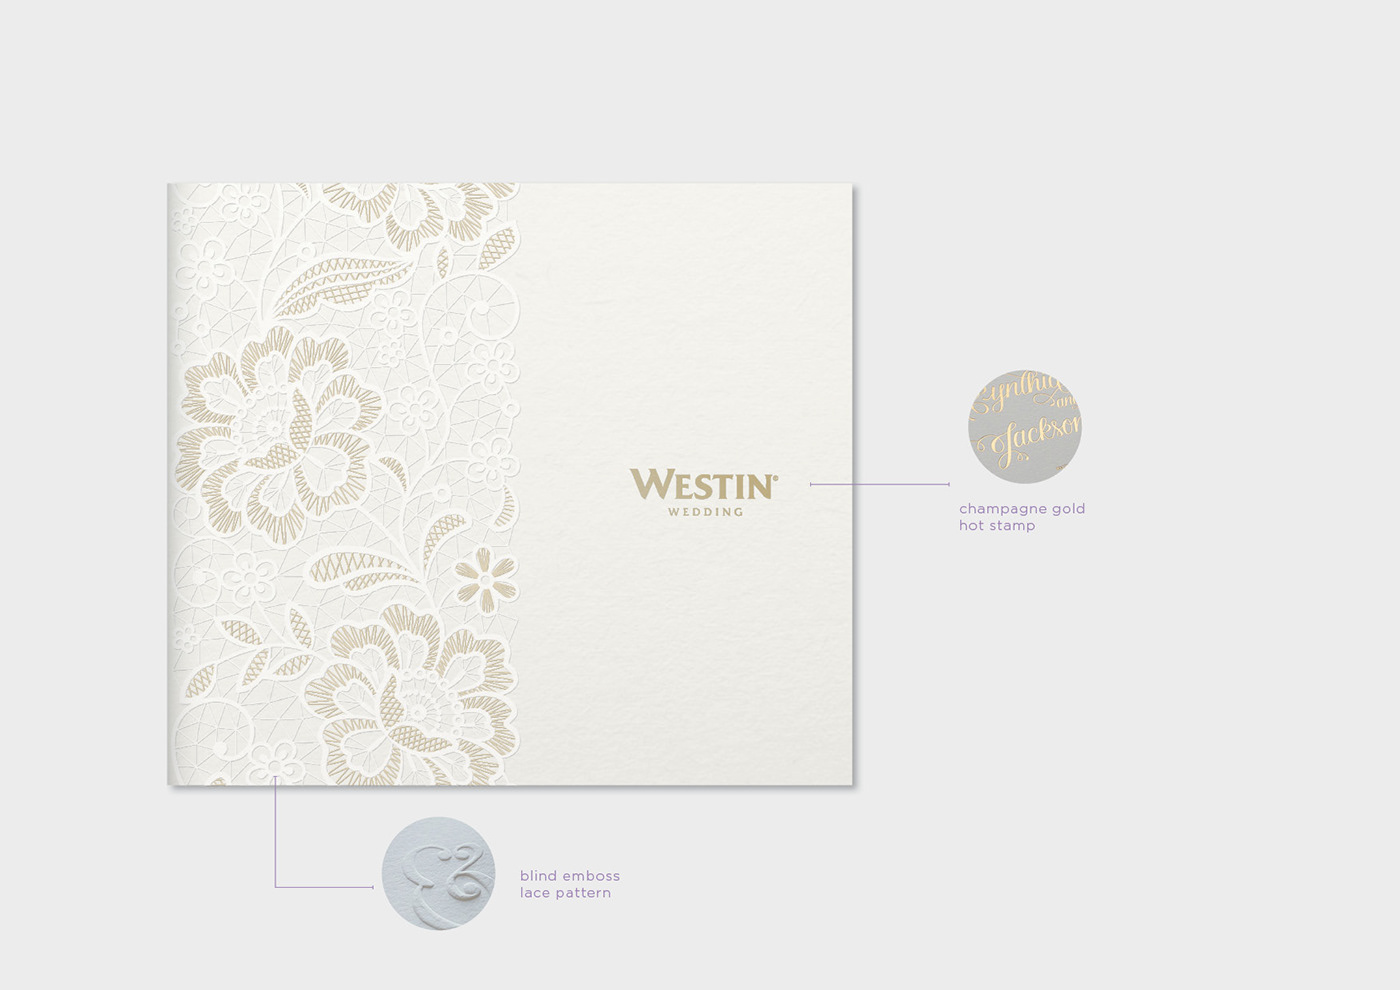 Westin hotel wedding brochure Packaging jakarta indonesia profile ballroom editorial